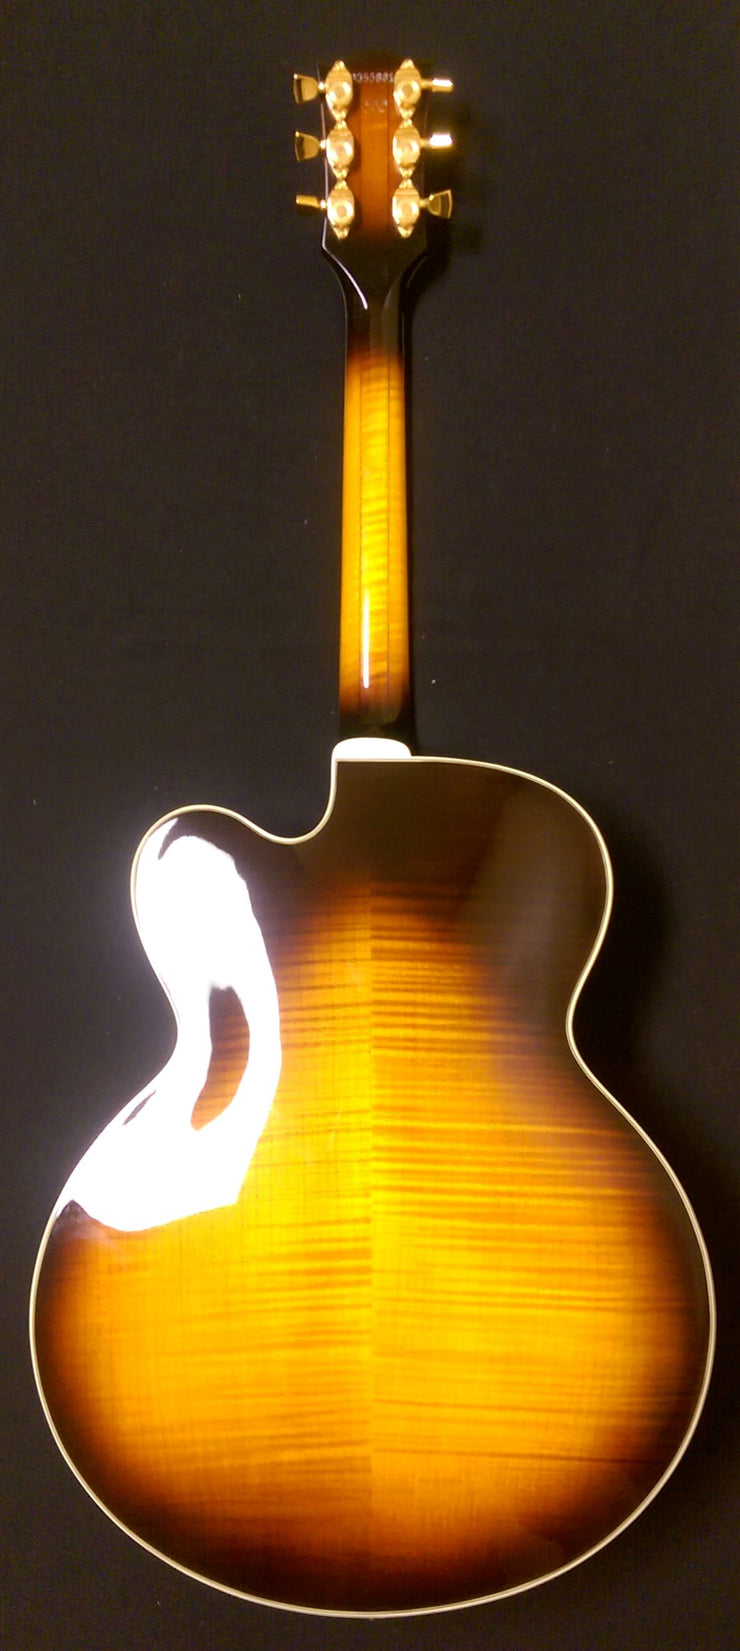 Gibson L5 Custom ****SOLD****